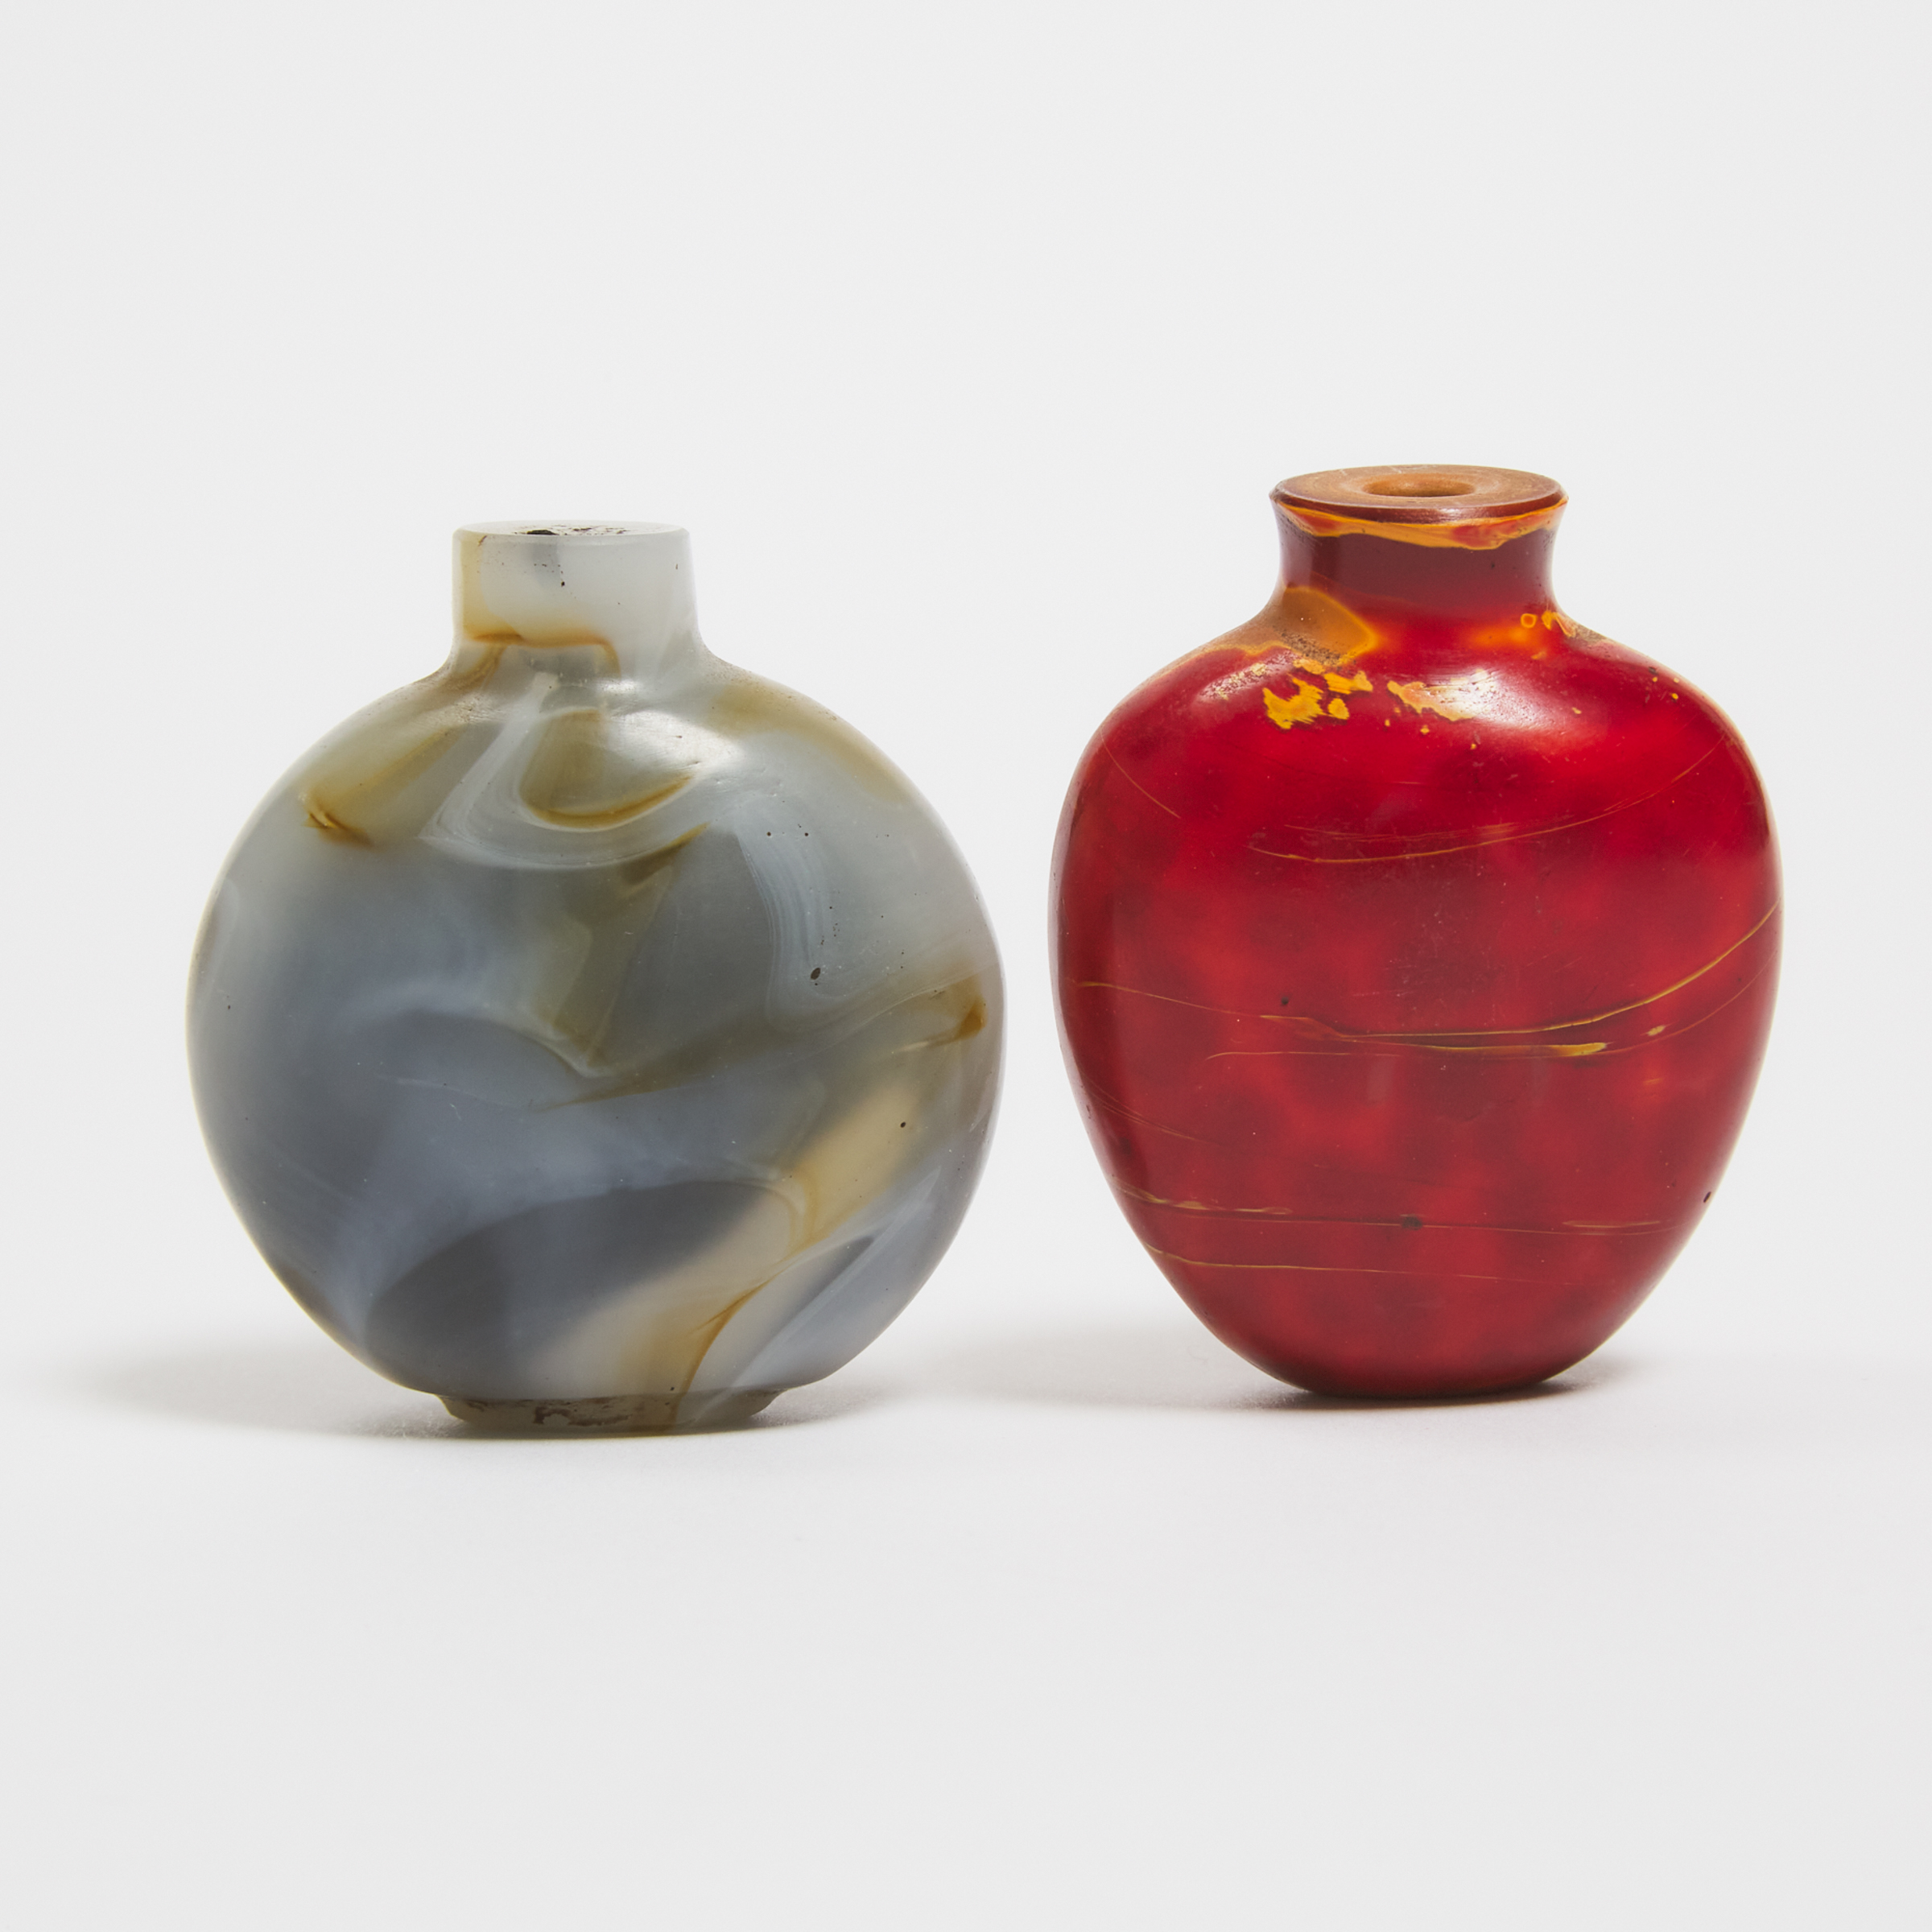 An Imitation-Realgar Glass Snuff Bottle, Together With an Imitation-Agate Glass Snuff Bottle, 19th Century